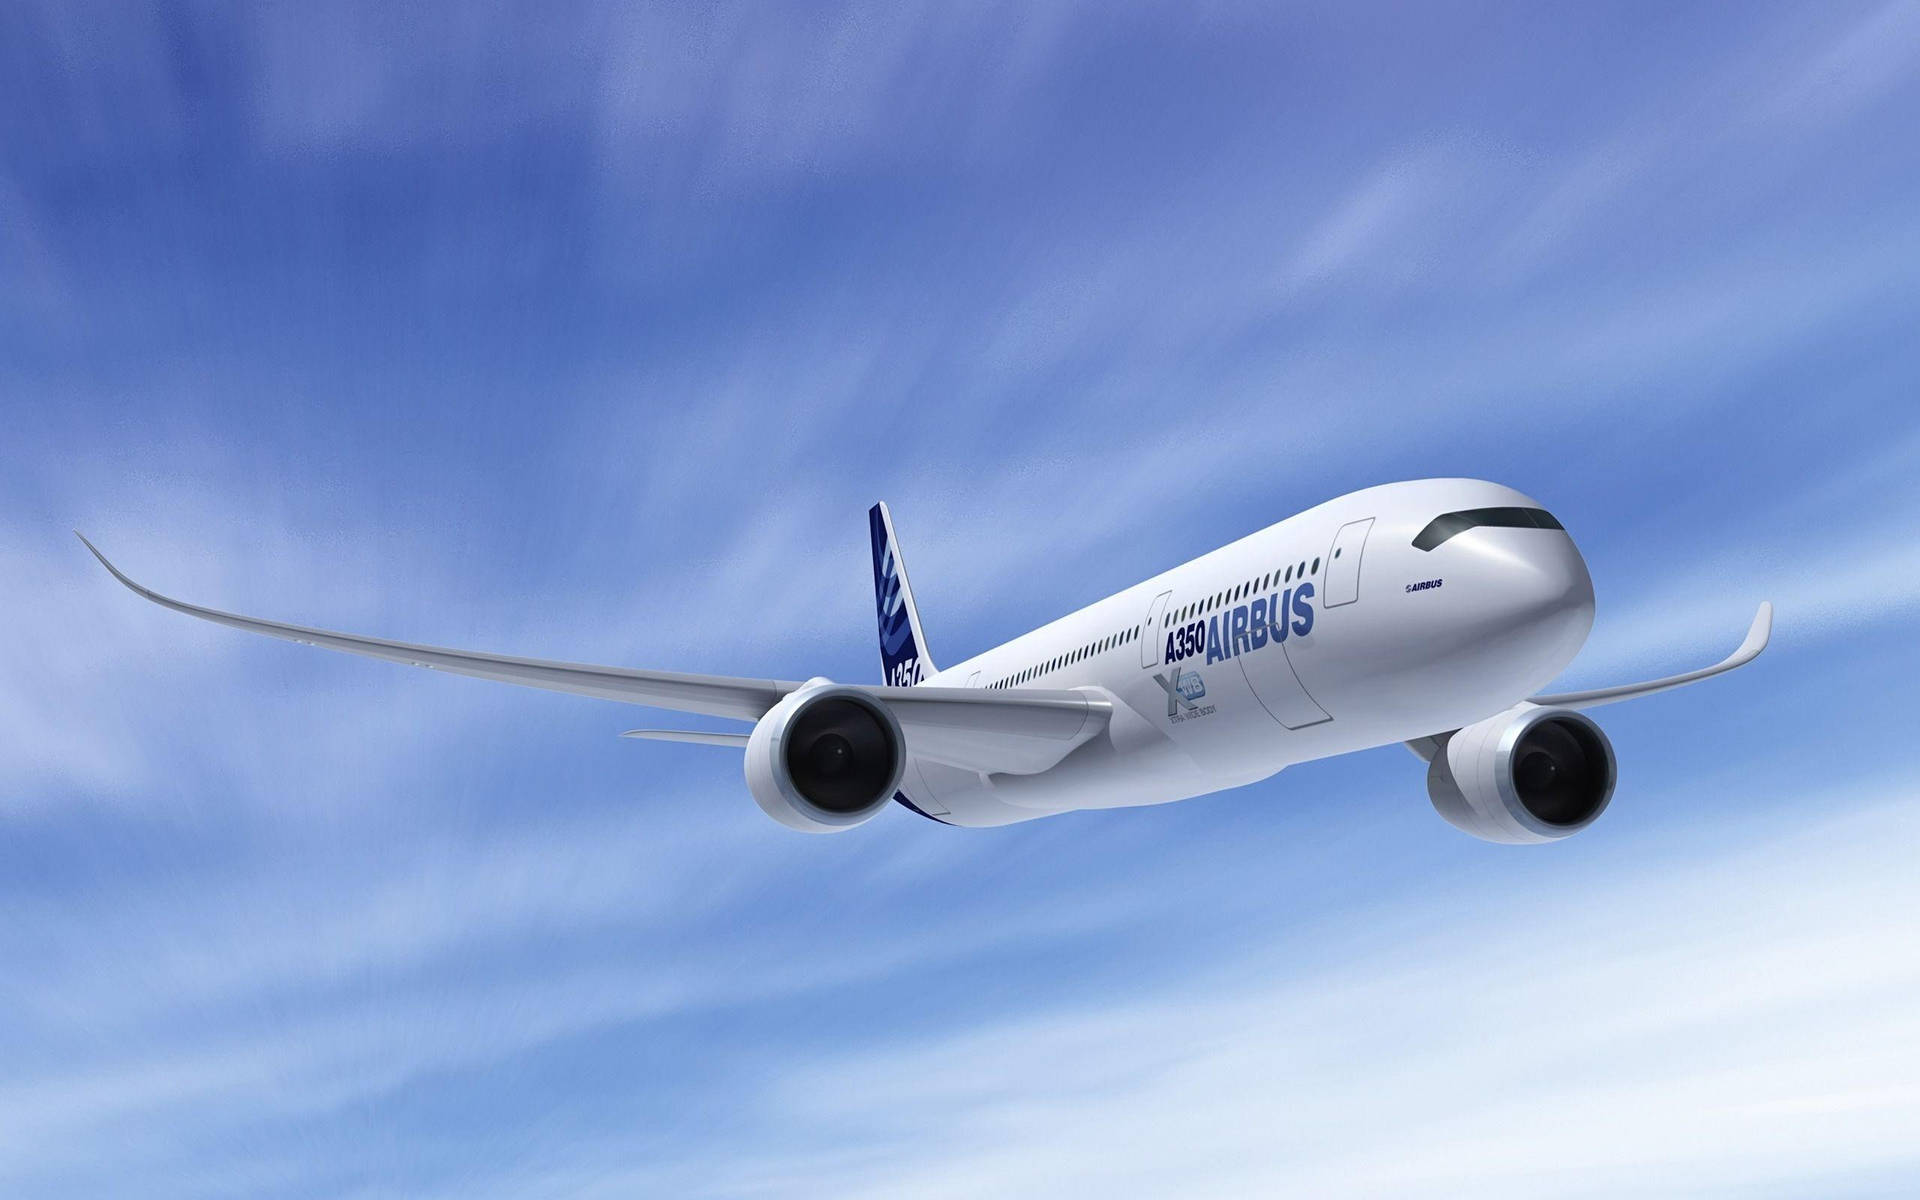 Motion Blur Airbus Hd Plane Background